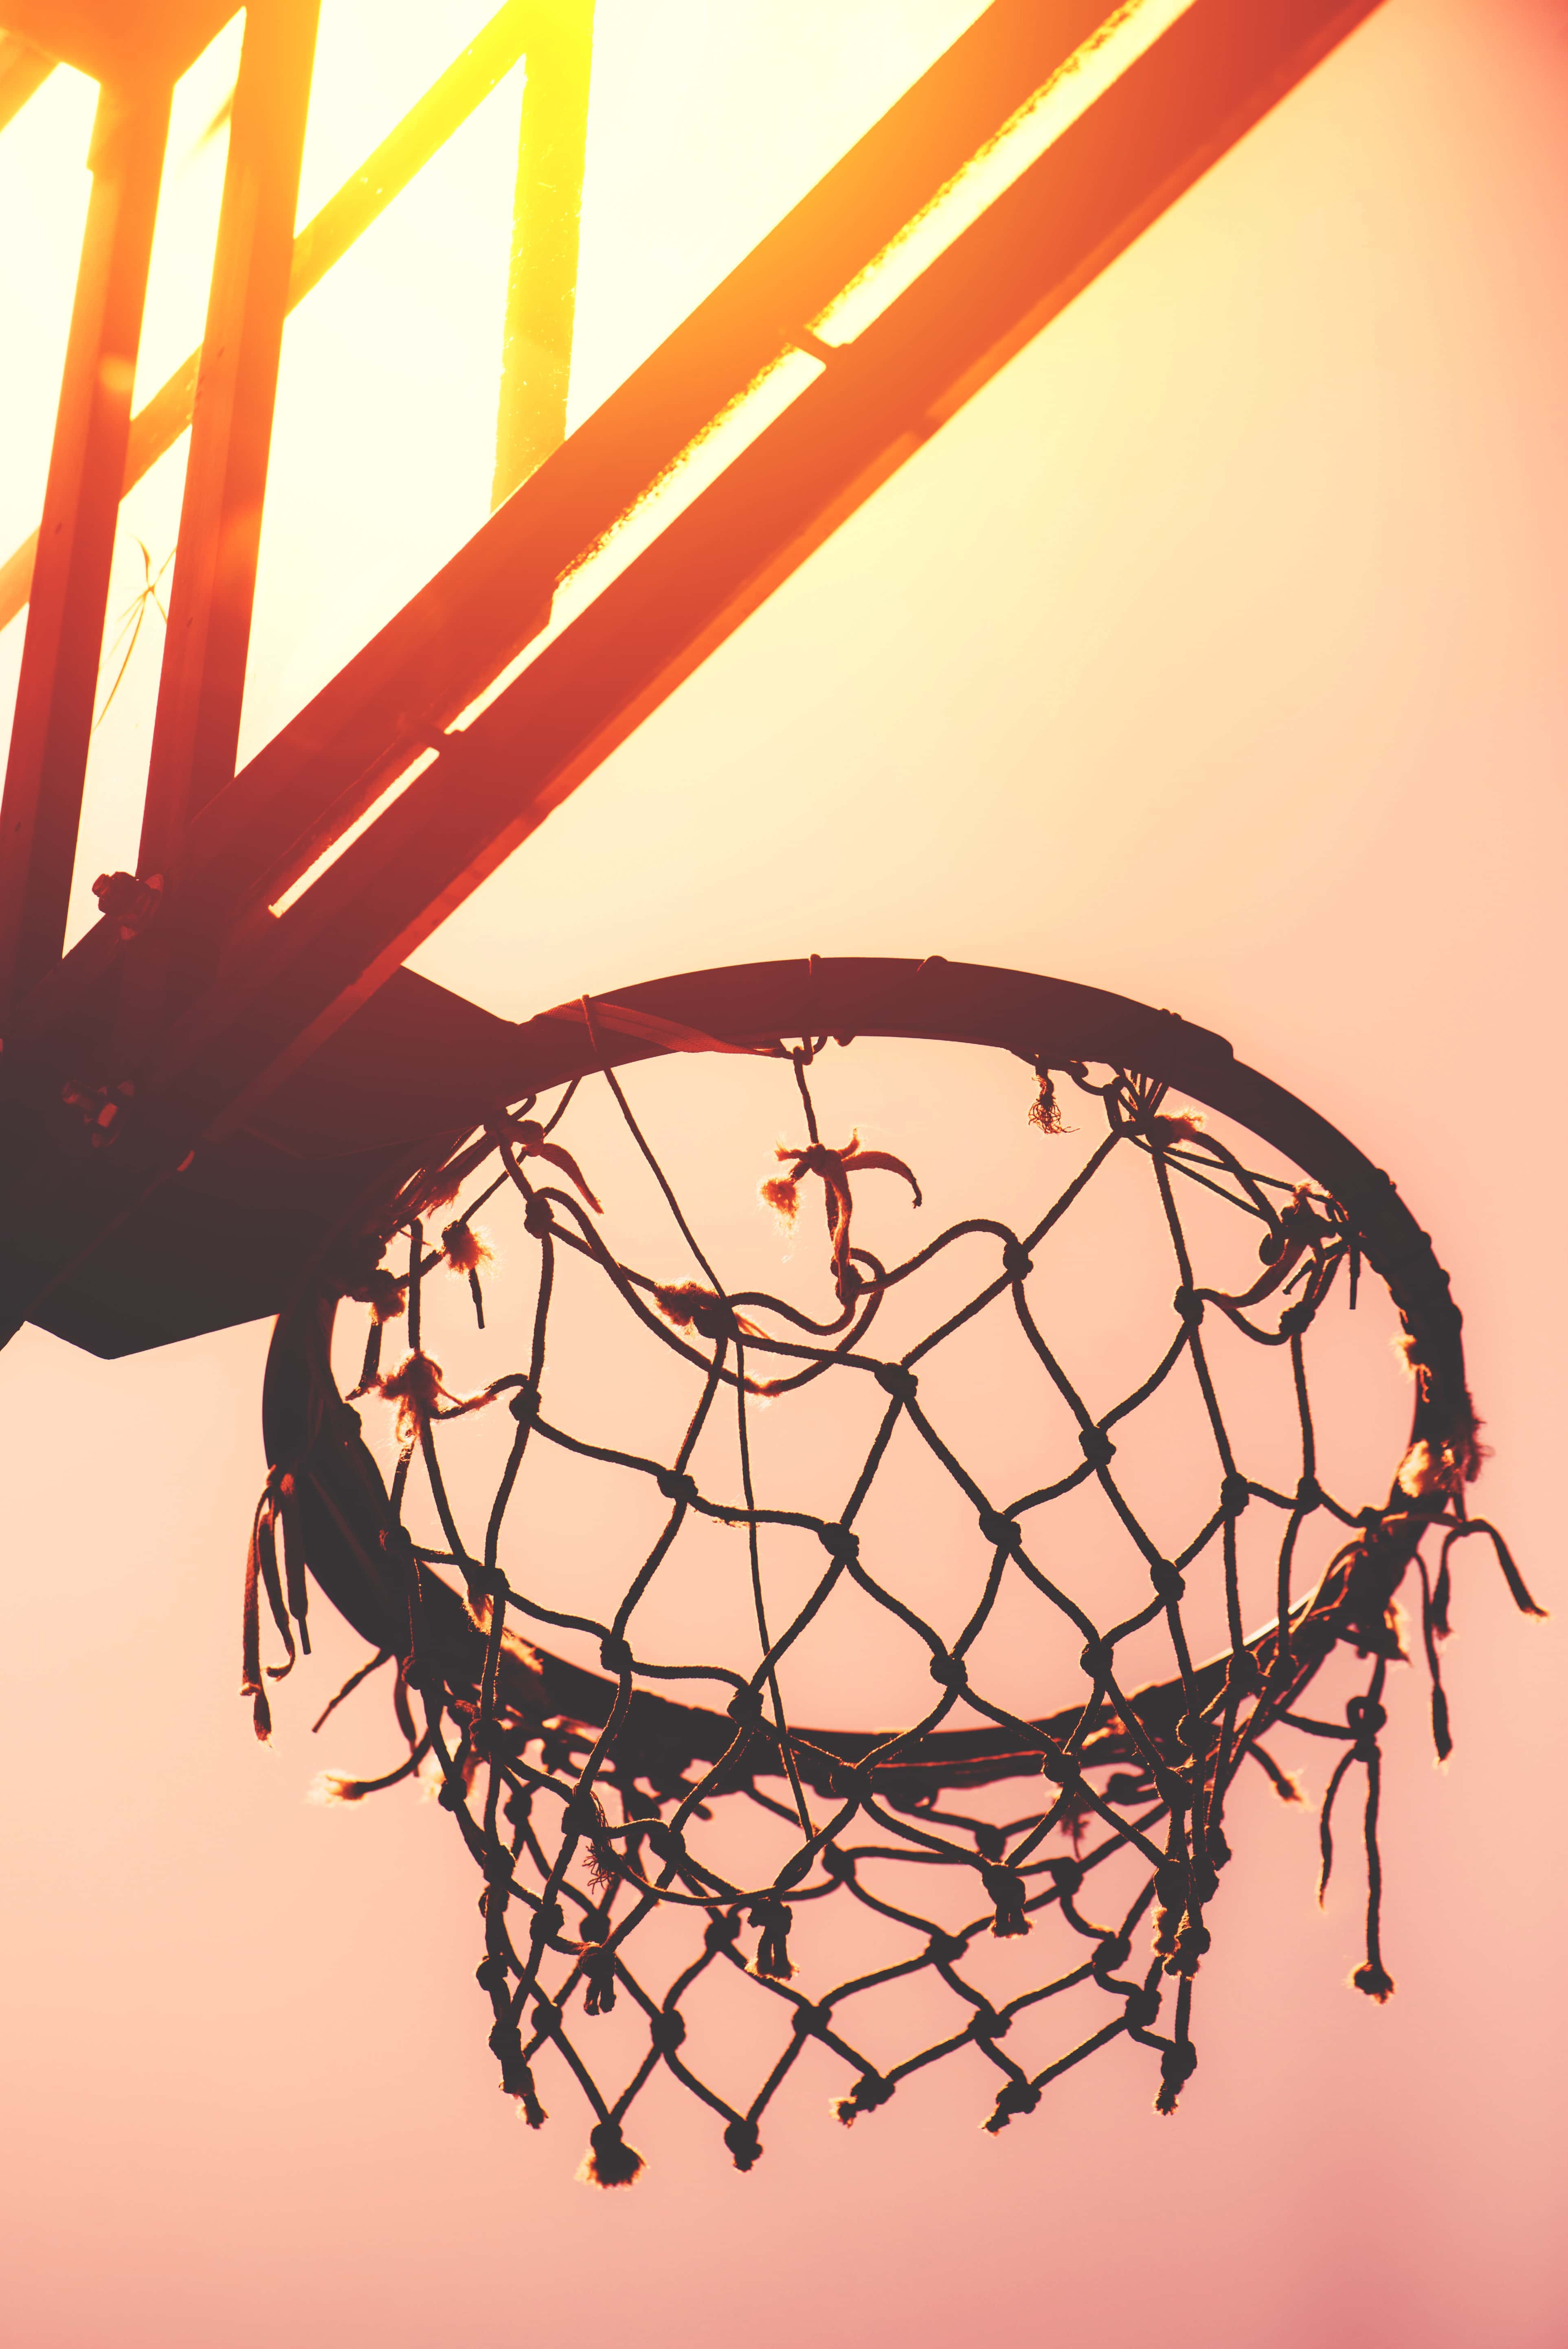 basketball-hoop-on-amateur-outdoor-basketball-court